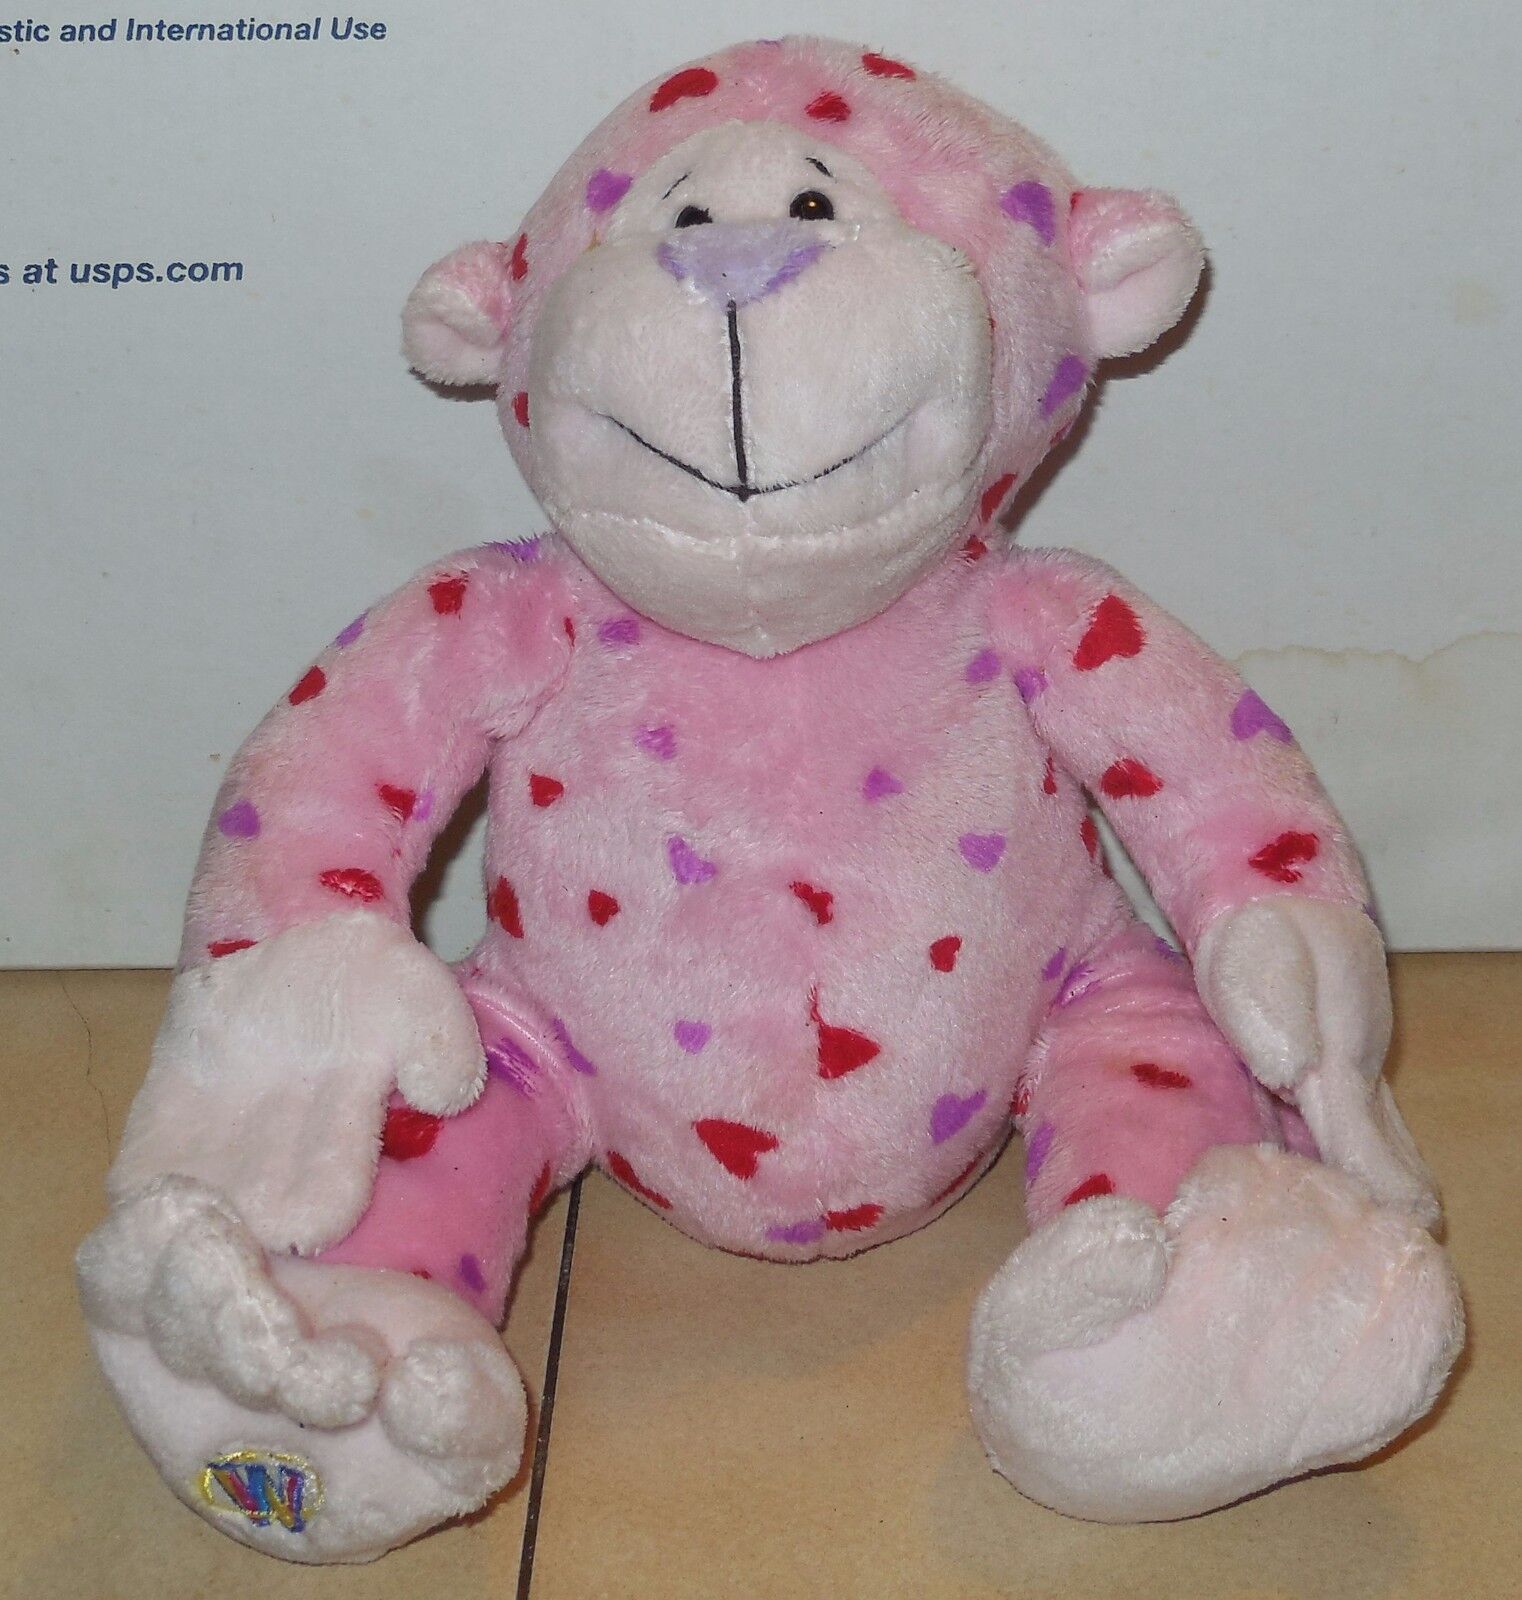 Primary image for Ganz Webkinz Love Monkey 9" plush Stuffed Animal toy Valentines Day Pink Hearts